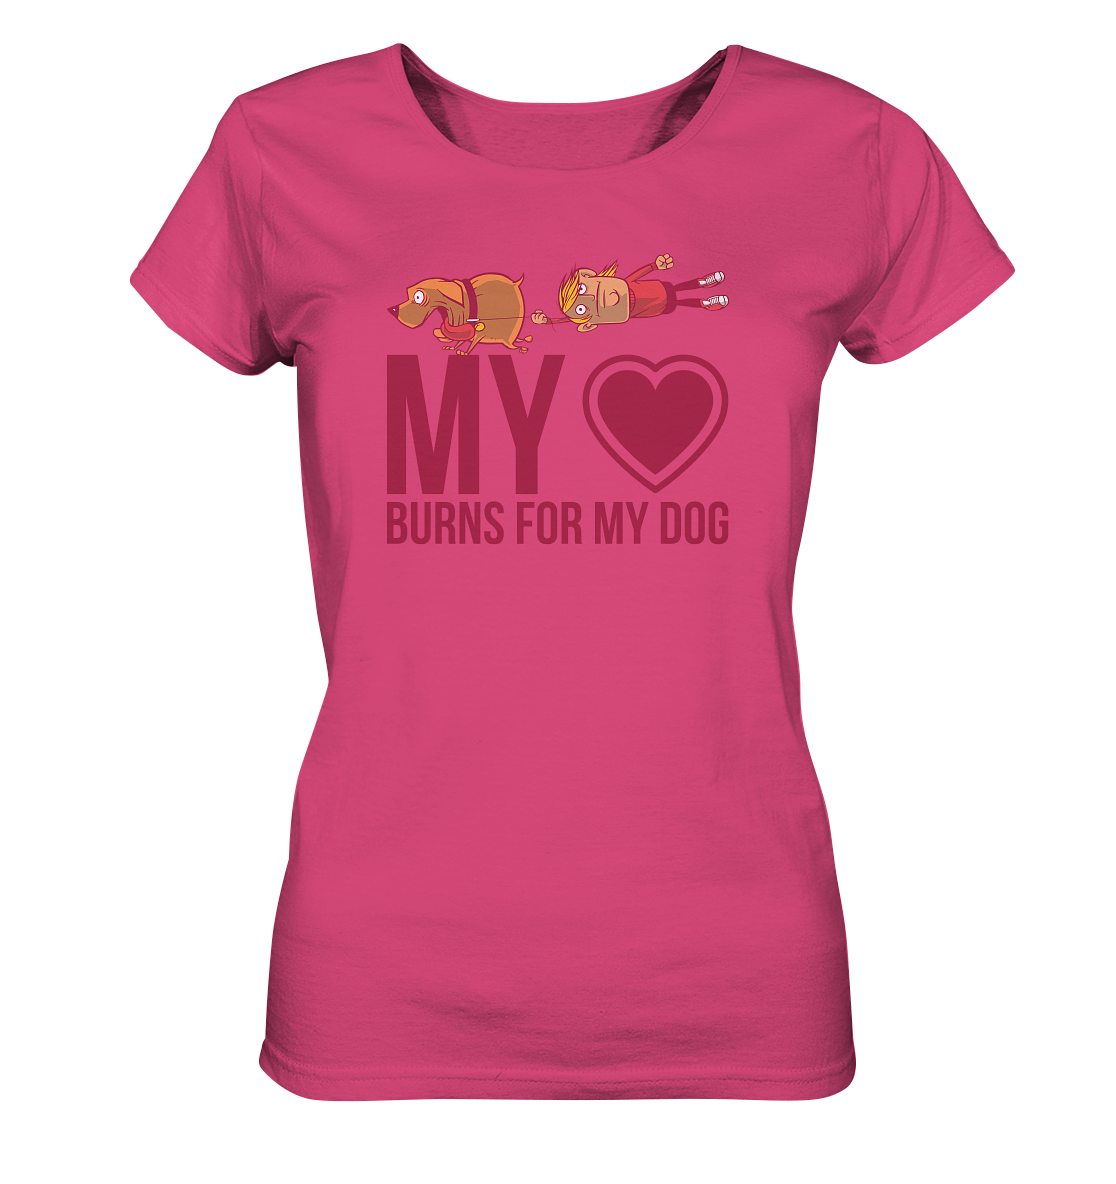 I love my dog - Ladies Organic Shirt